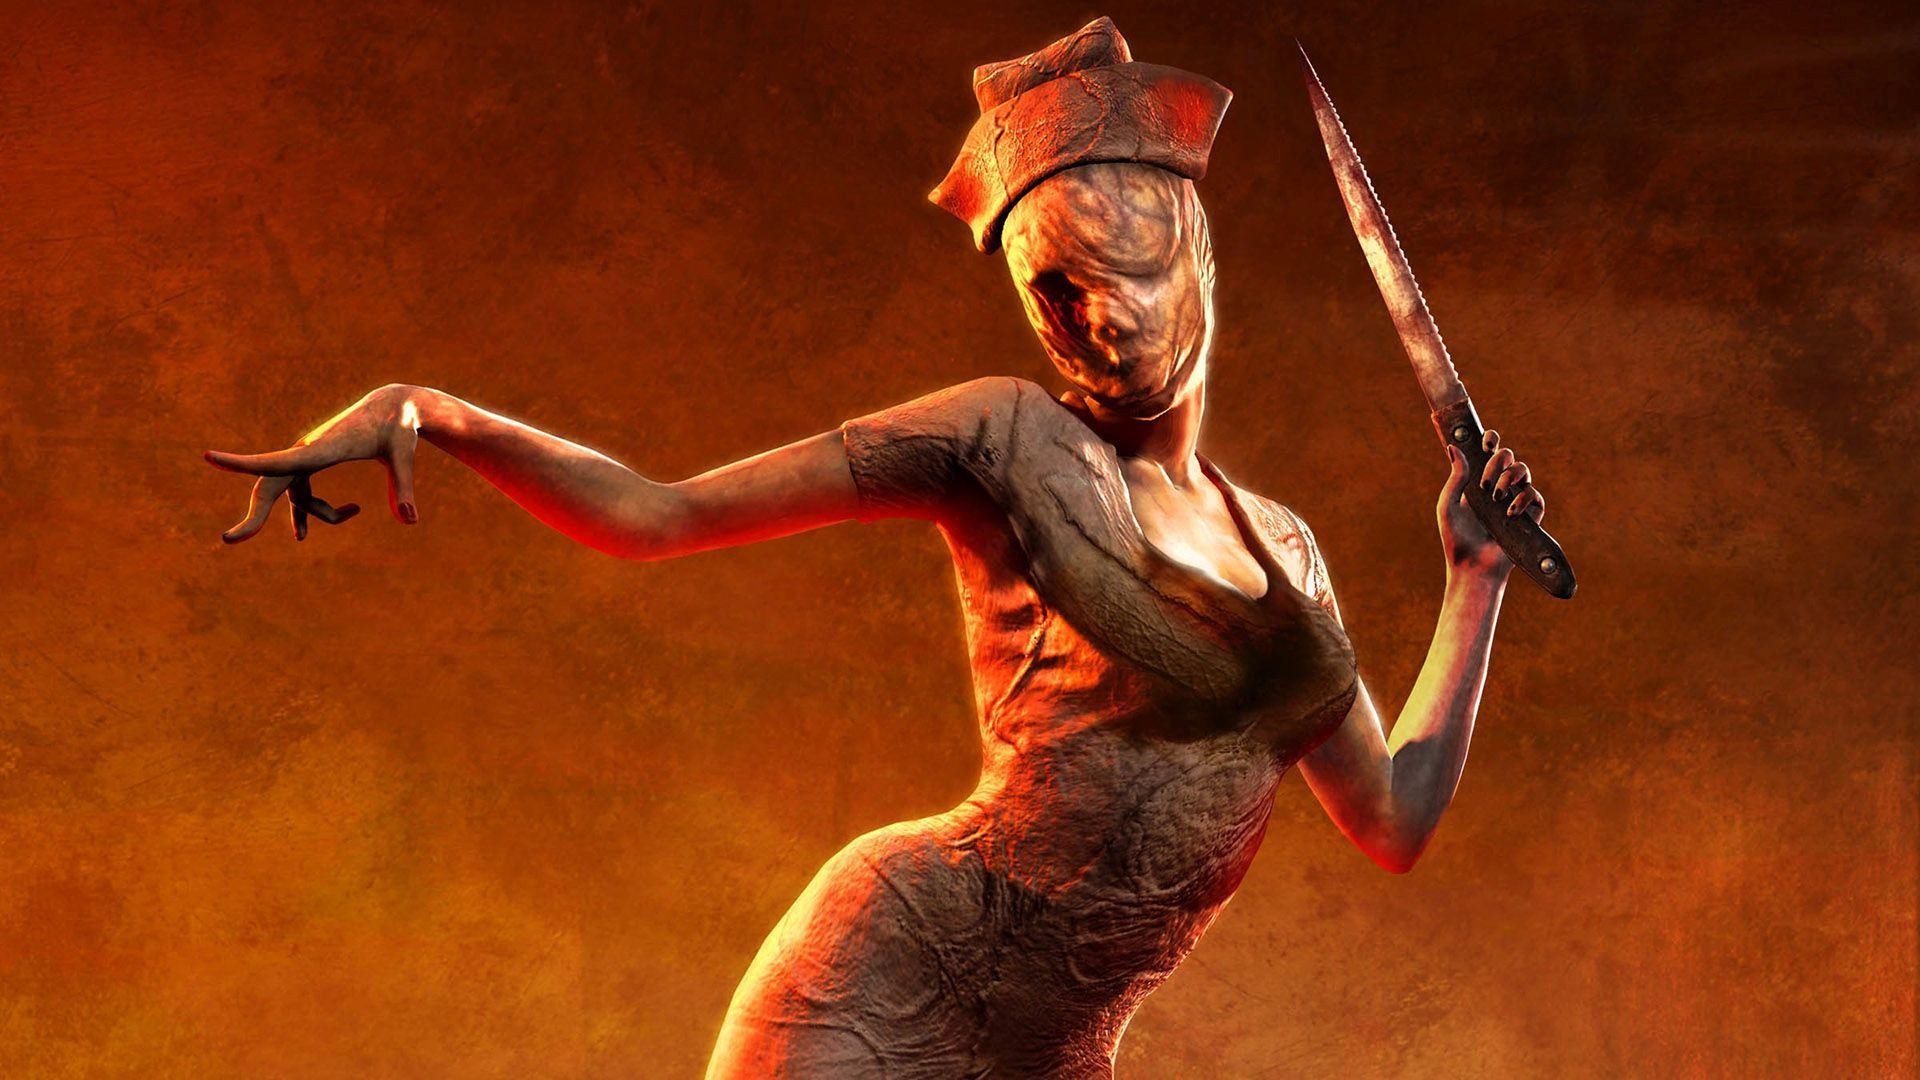 Silent Hill 2 Remake: Bloober Team Urges Patience - DevX